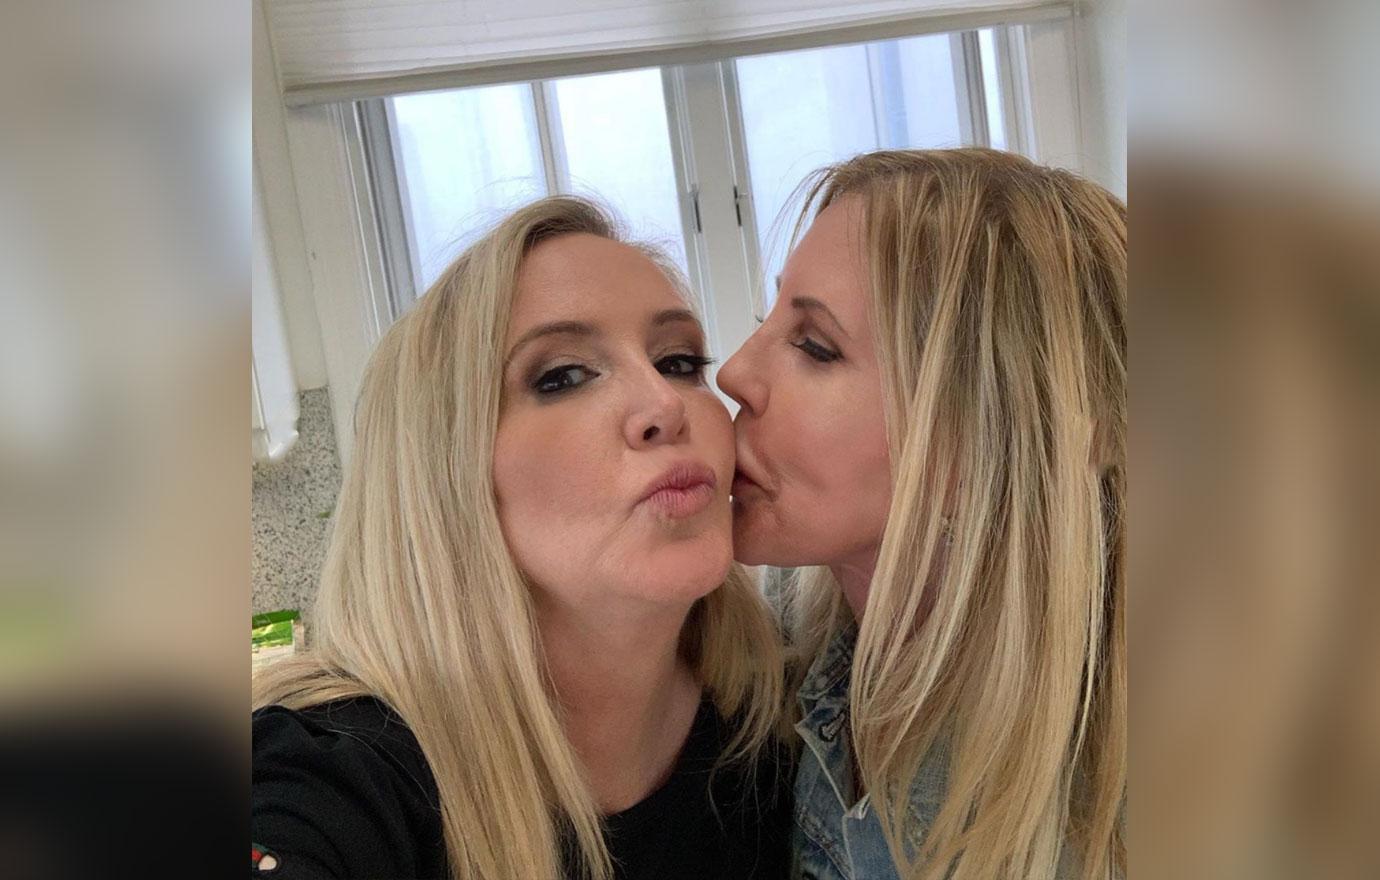 Shannon twins kiss - Kristina and Karissa Shannon.